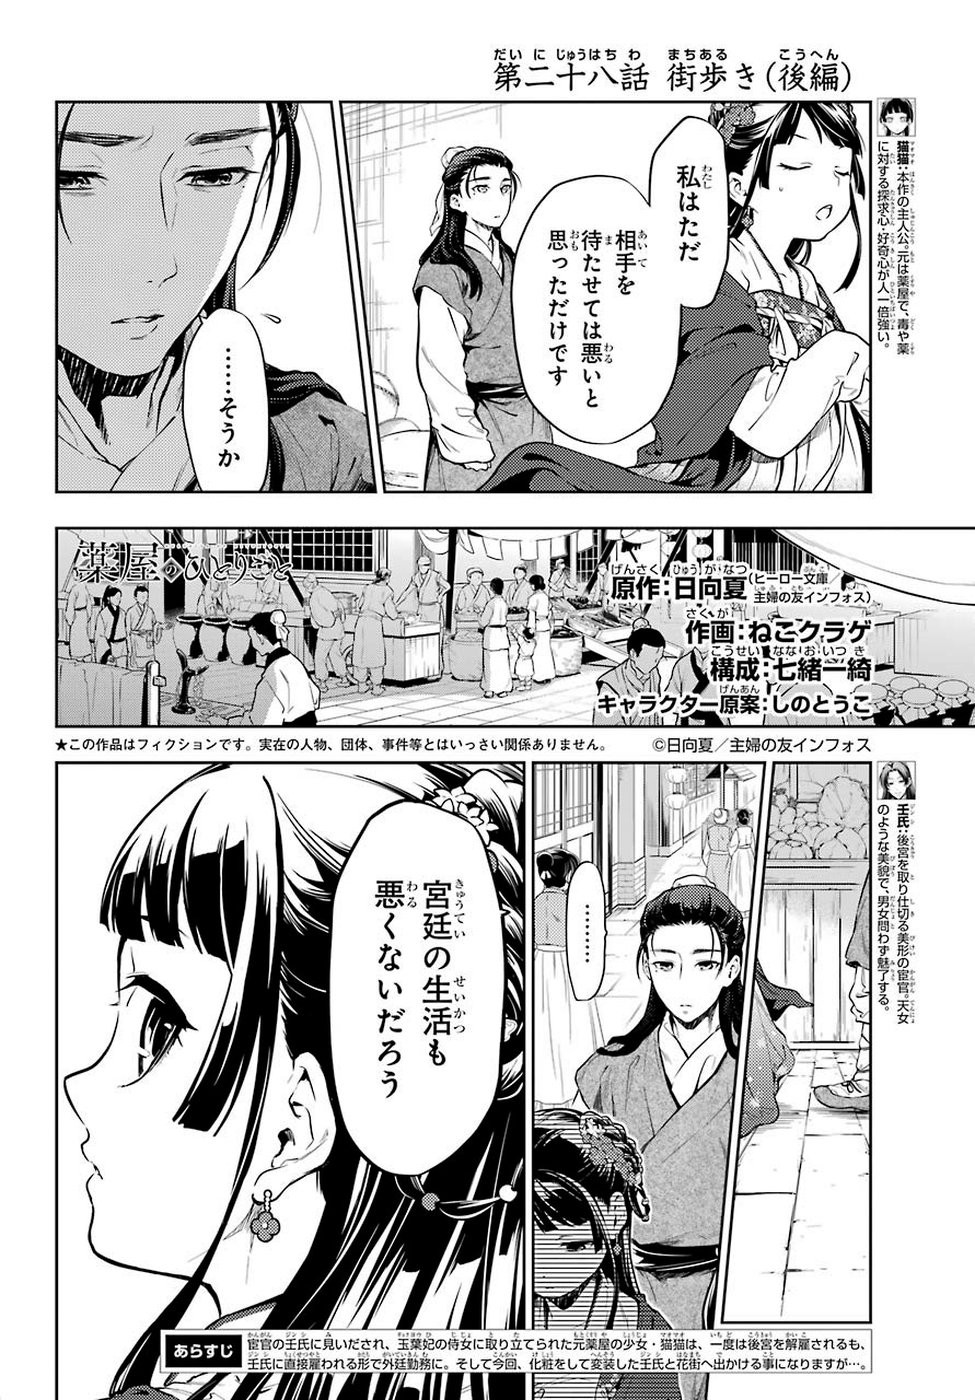 Kusuriya no Hitorigoto - Chapter 28-1 - Page 2